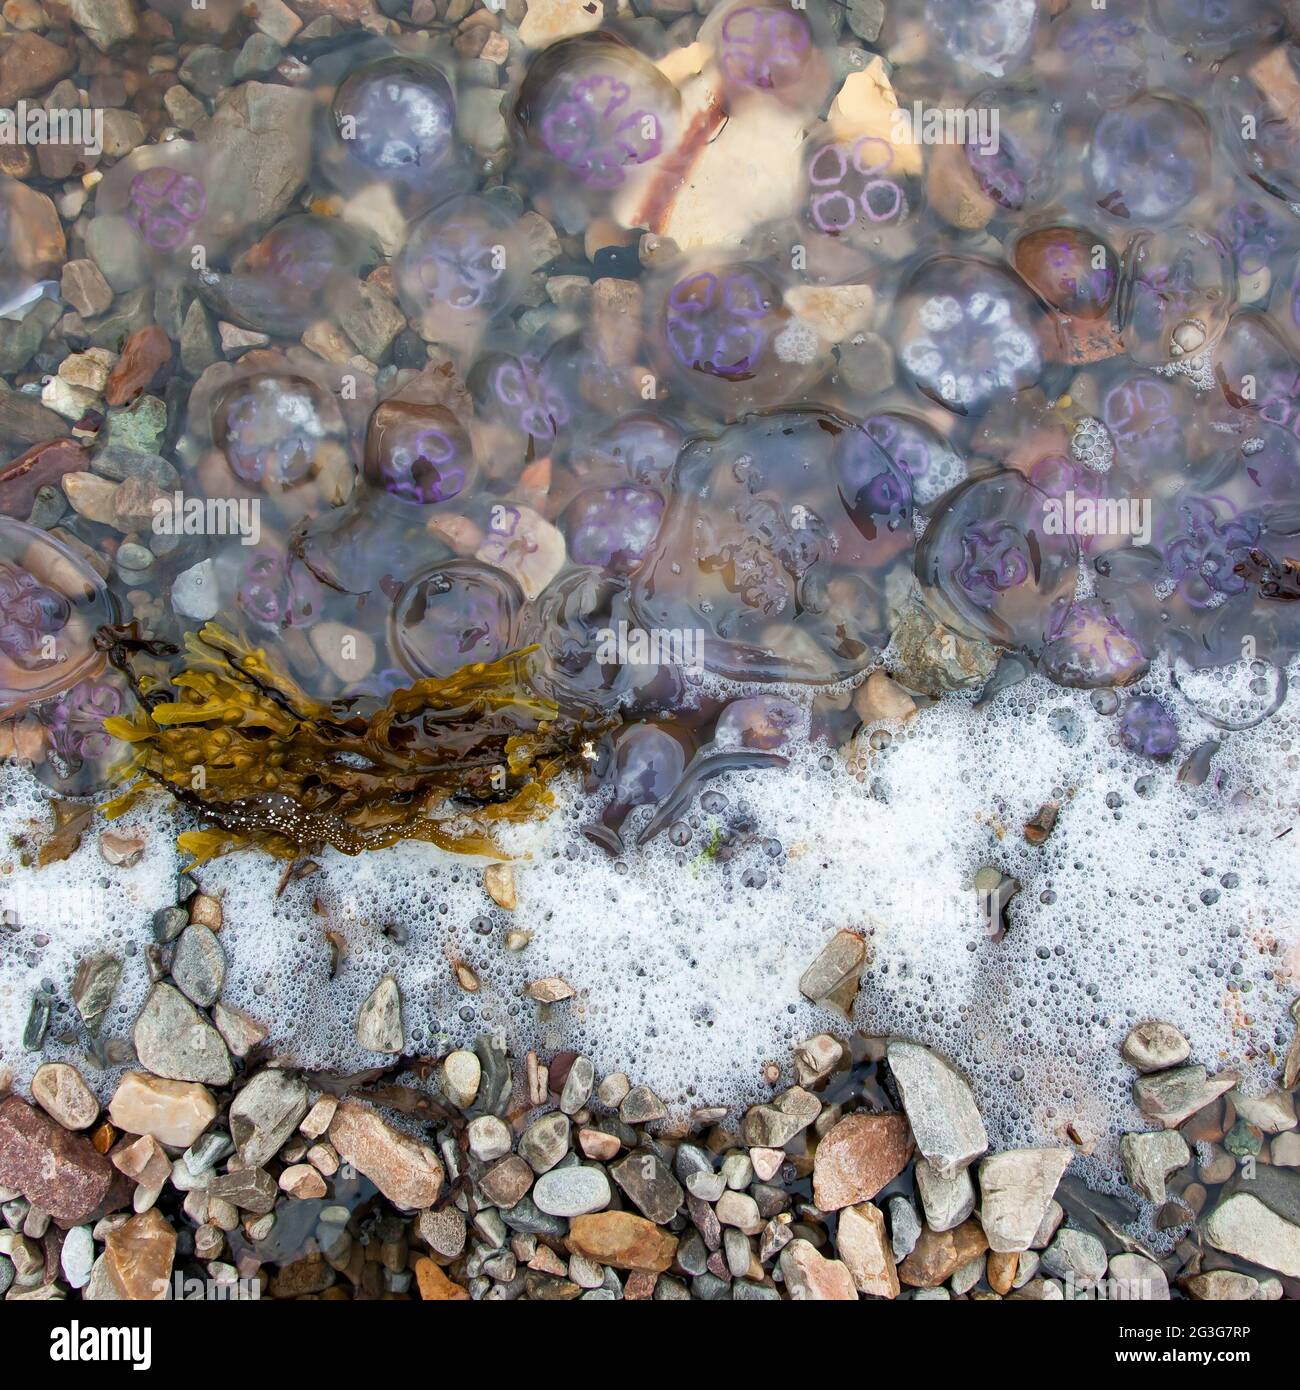 Small jellyfish washing up on a beach Stock Photo